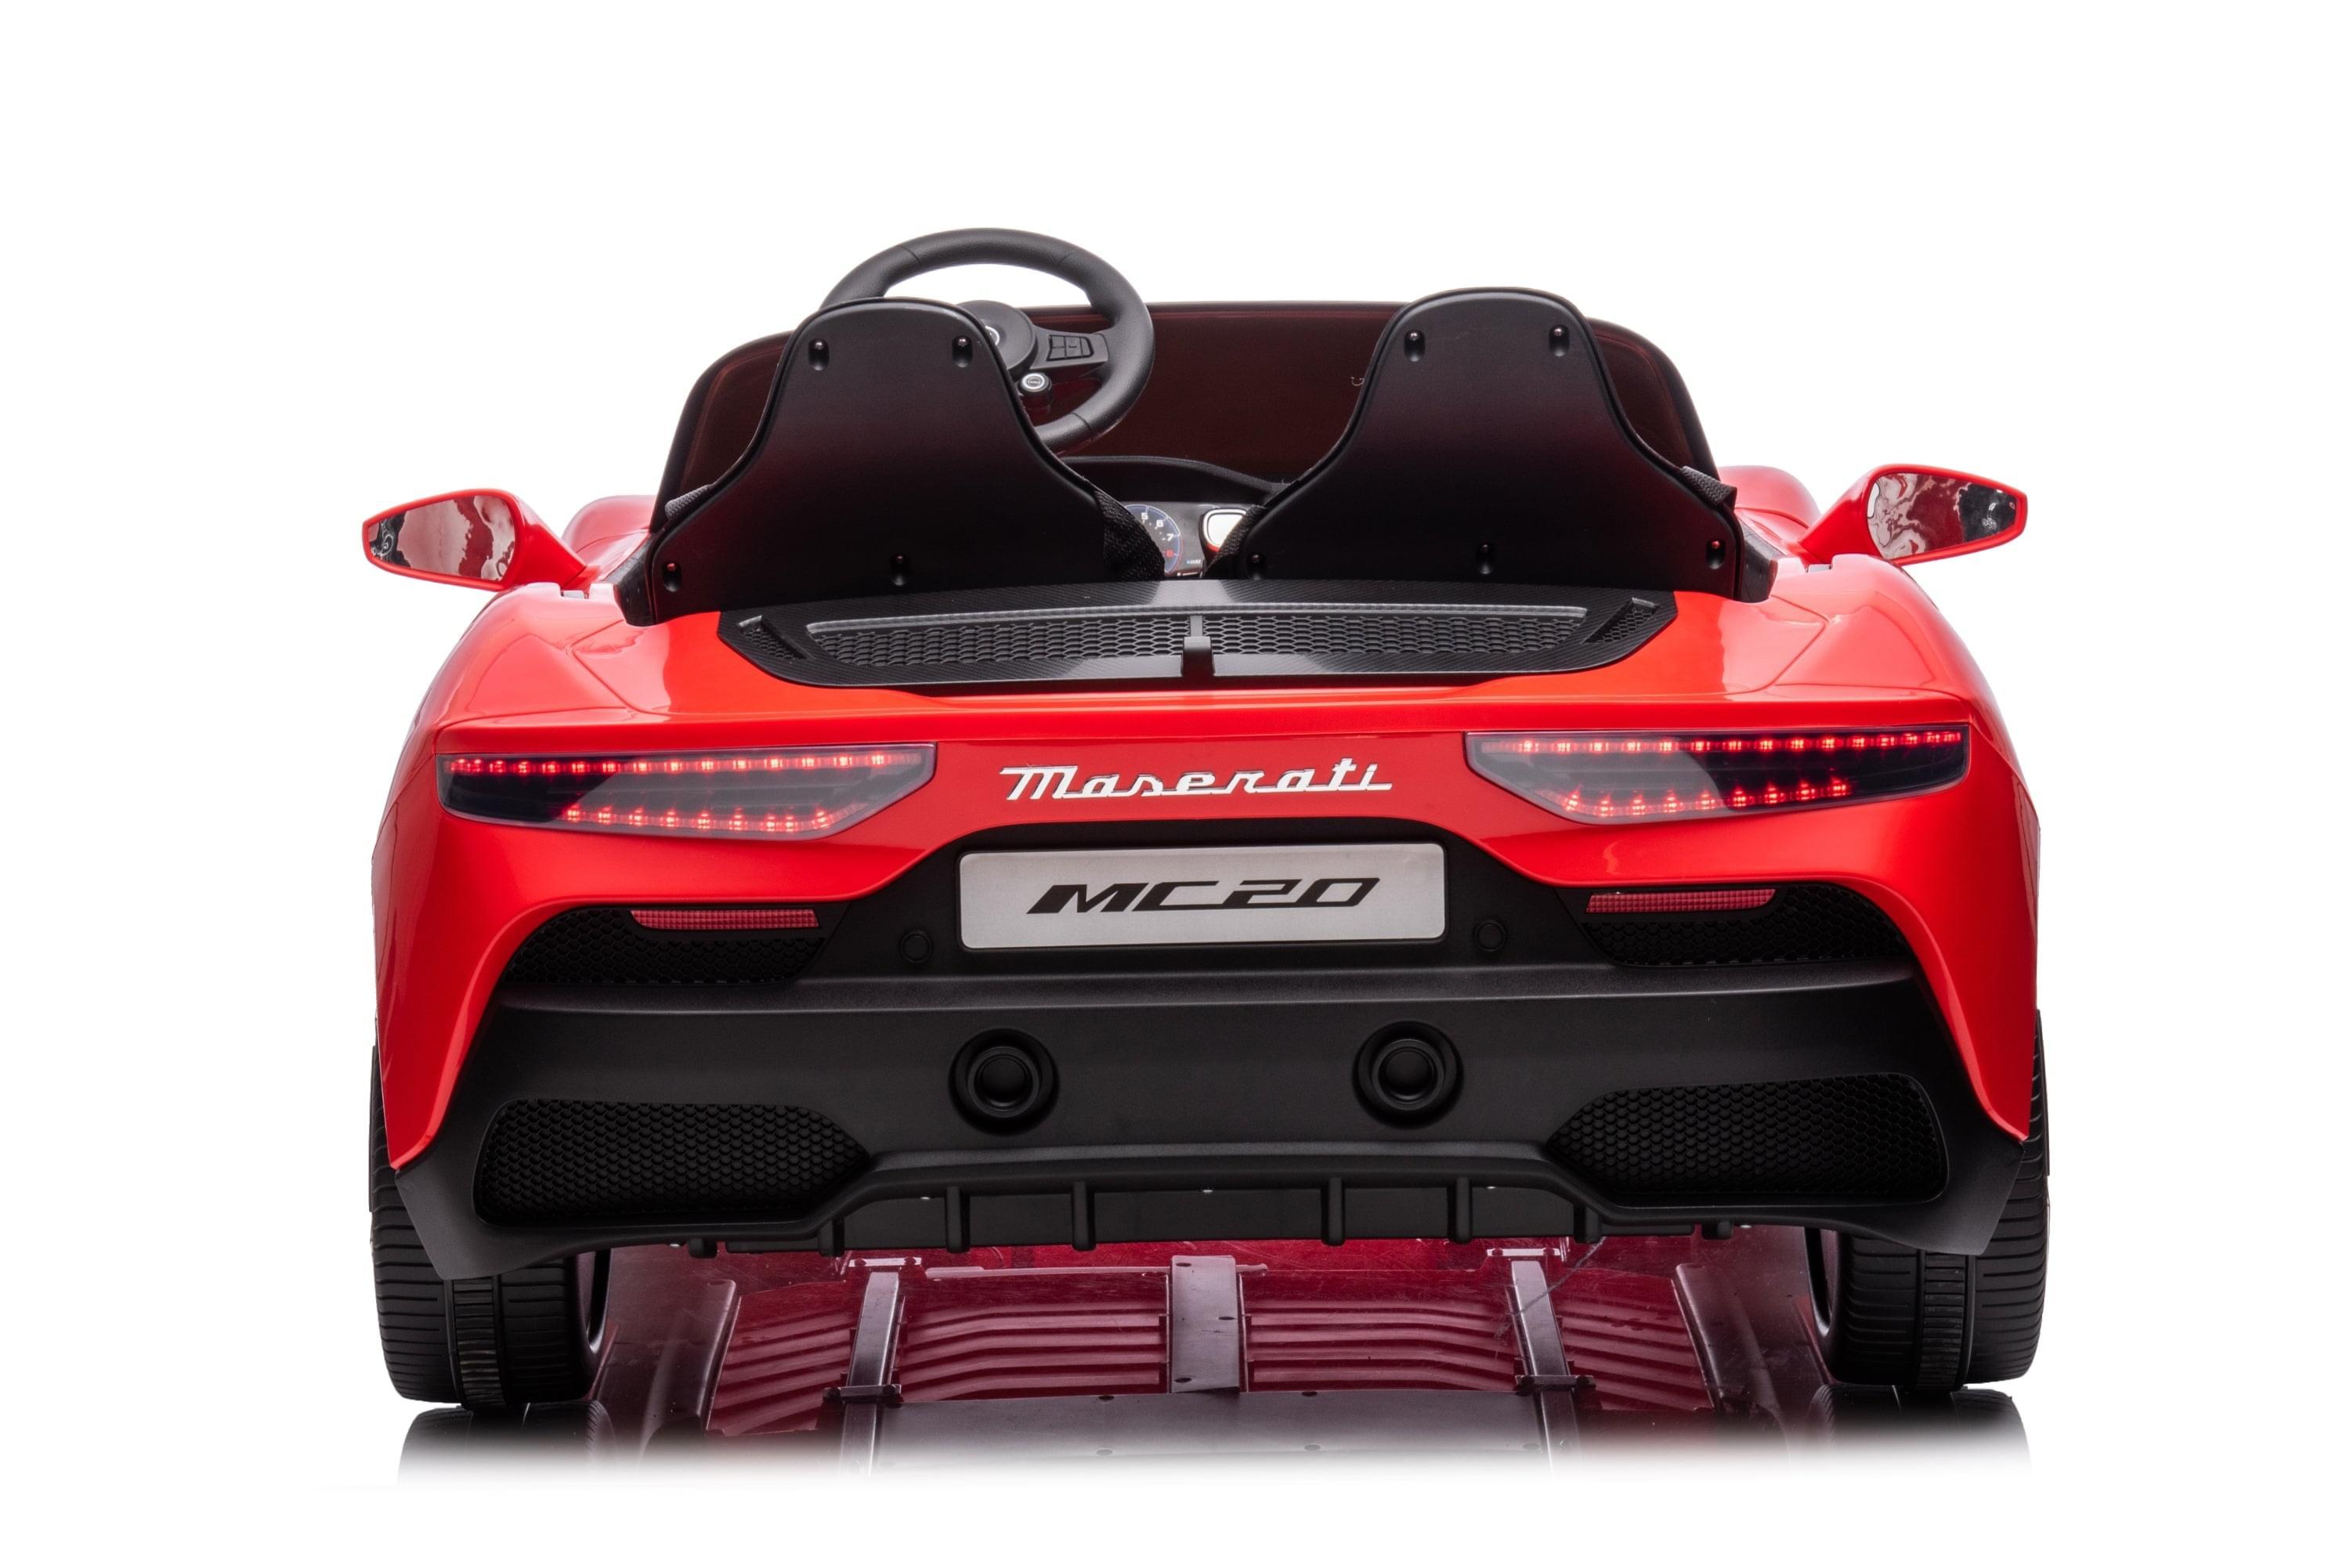 24V 4x4 Maserati MC20 2 Seater Ride on Car for Kids - DTI Direct USA